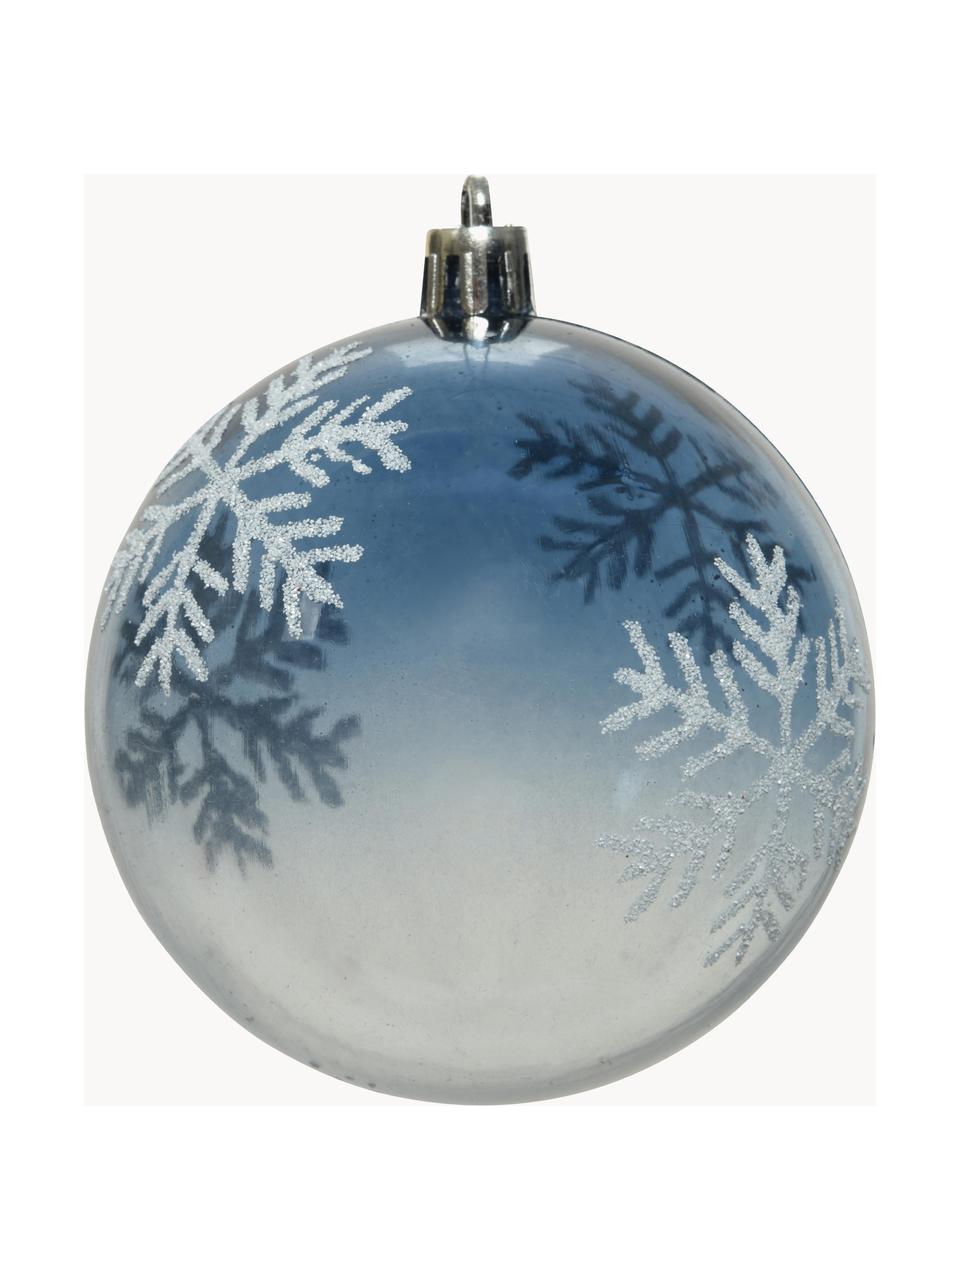 Breukvaste kerstballen Blue Snowflake, 4 stuks, Blauw, transparant, wit, Ø 8 x H 8 cm